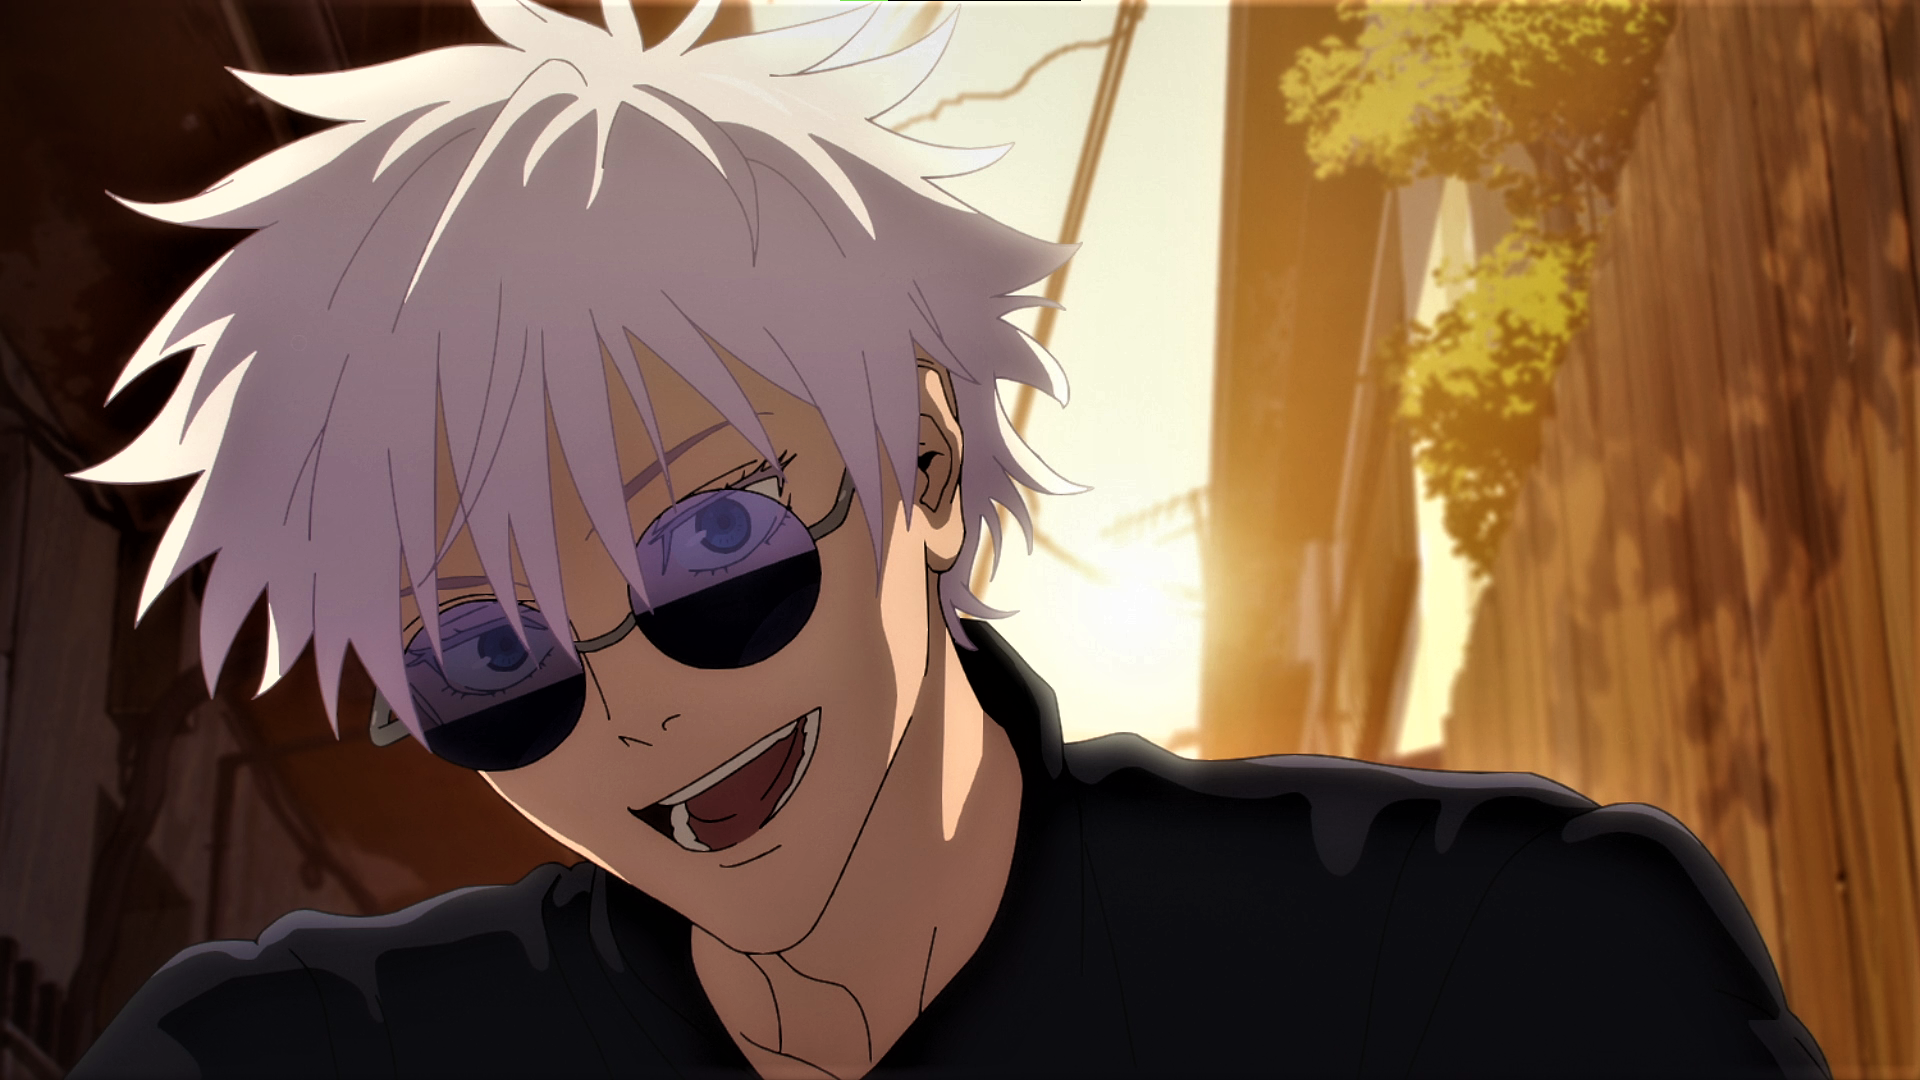 Anime 1920x1080 Jujutsu Kaisen Satoru Gojo white hair glasses sunlight trees smiling blue eyes anime Anime screenshot anime boys looking at viewer